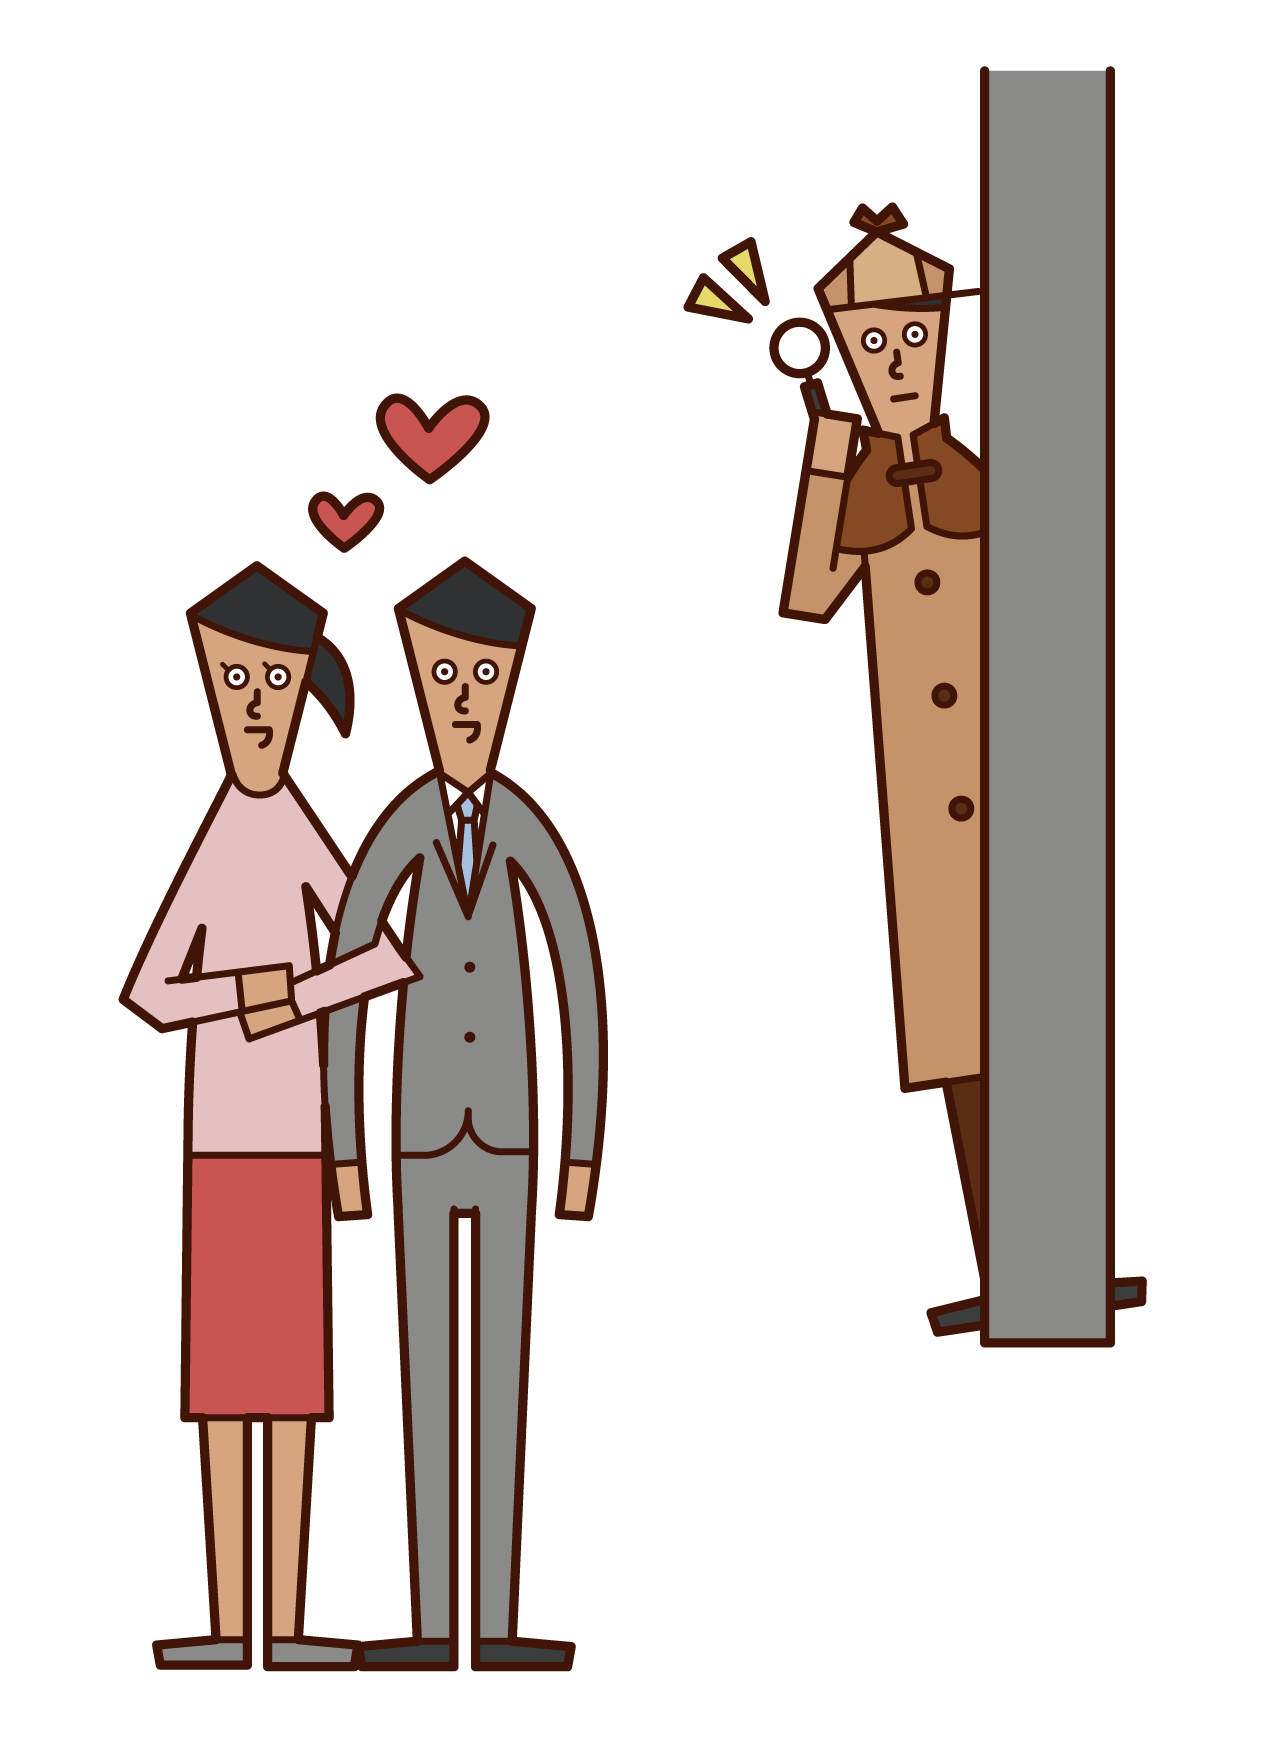 Illustration of a detective (man) investigating infidelity